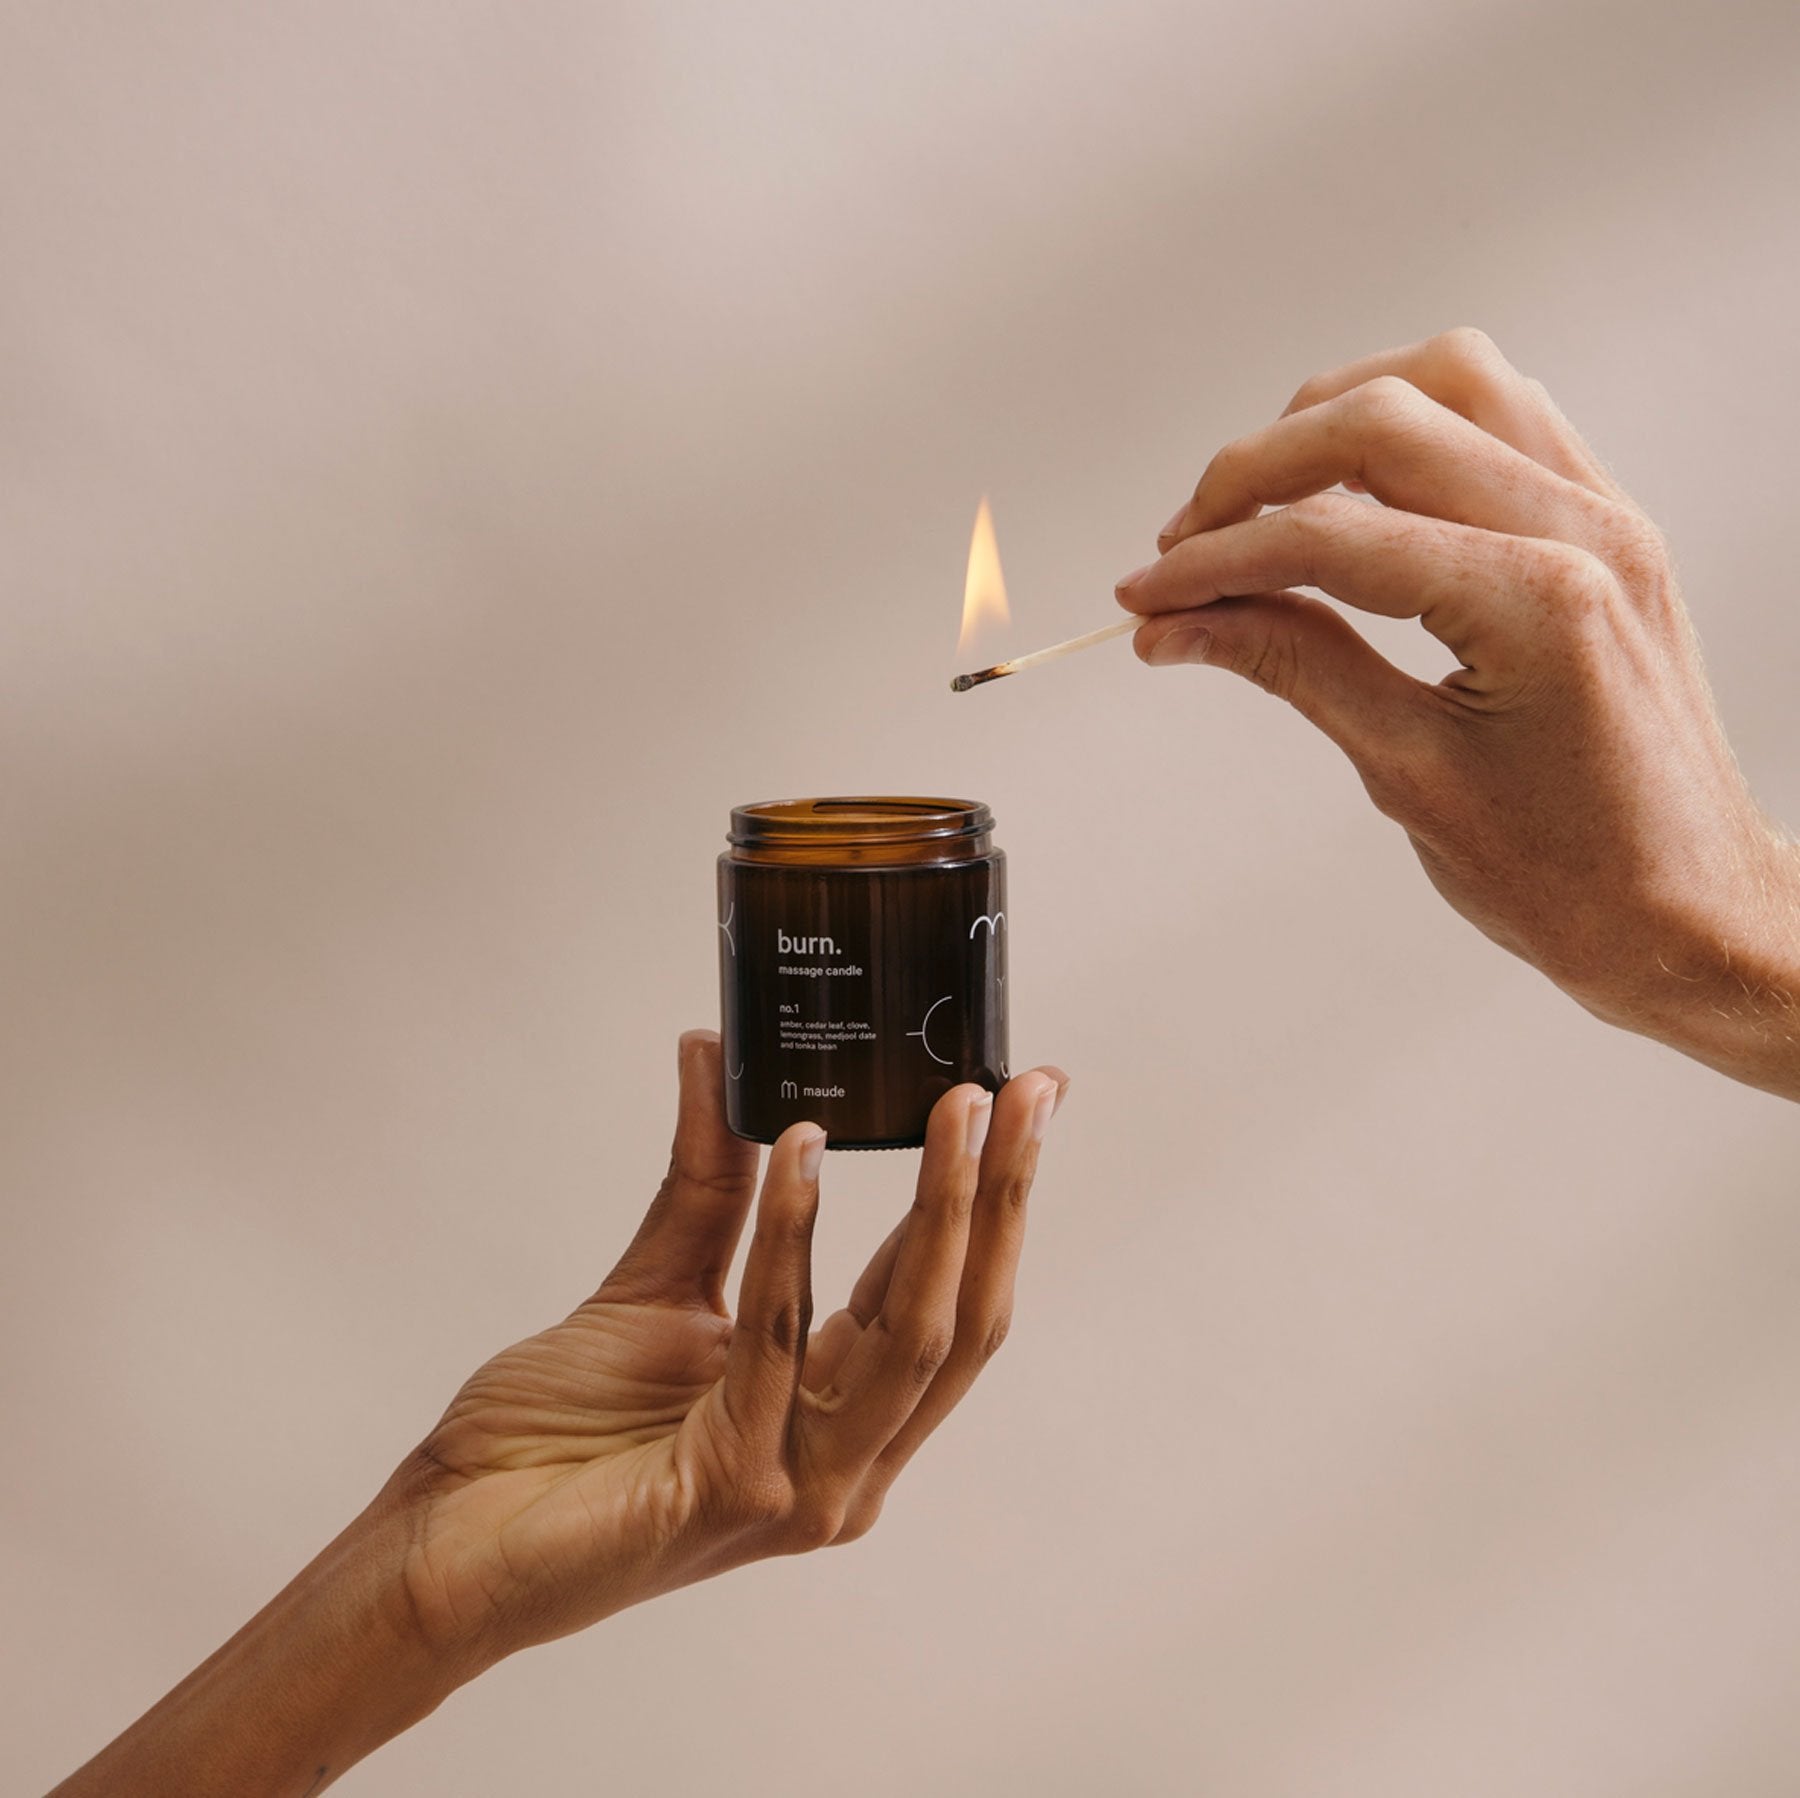 Burn Massage Candle